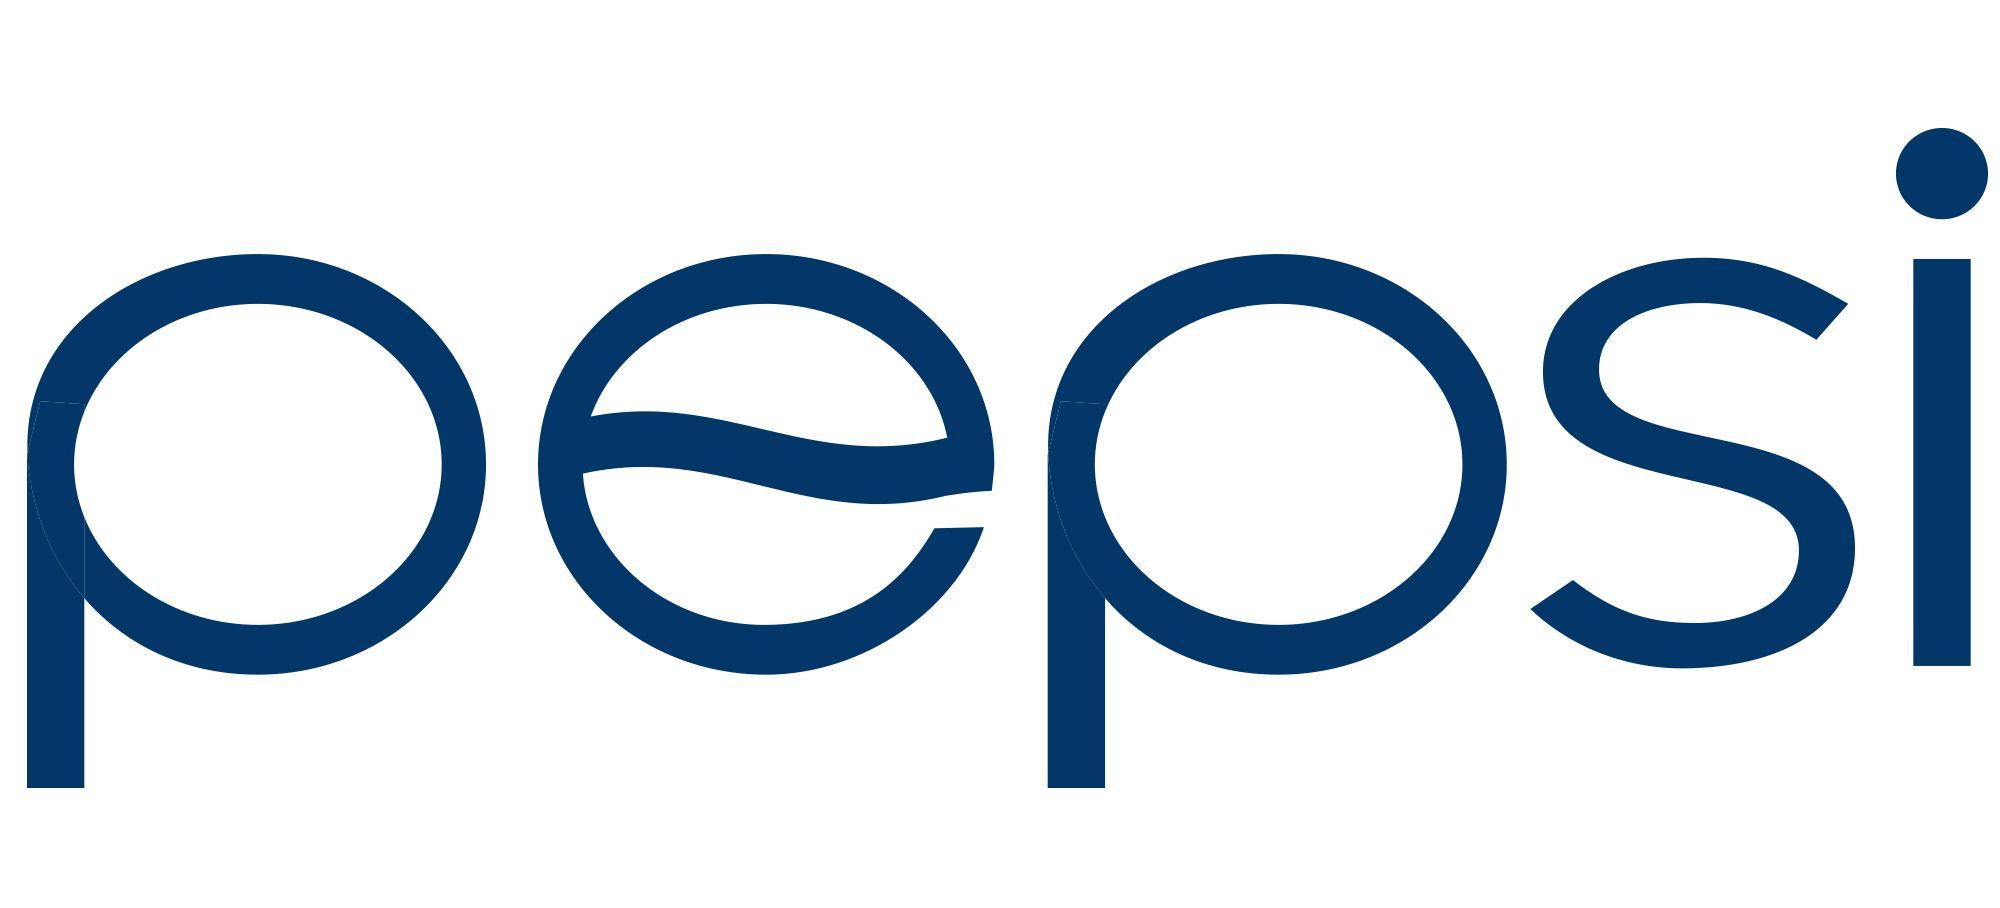 Popular Word Logo - Pepsi Logo, Pepsi Symbol, Meaning, History and Evolution